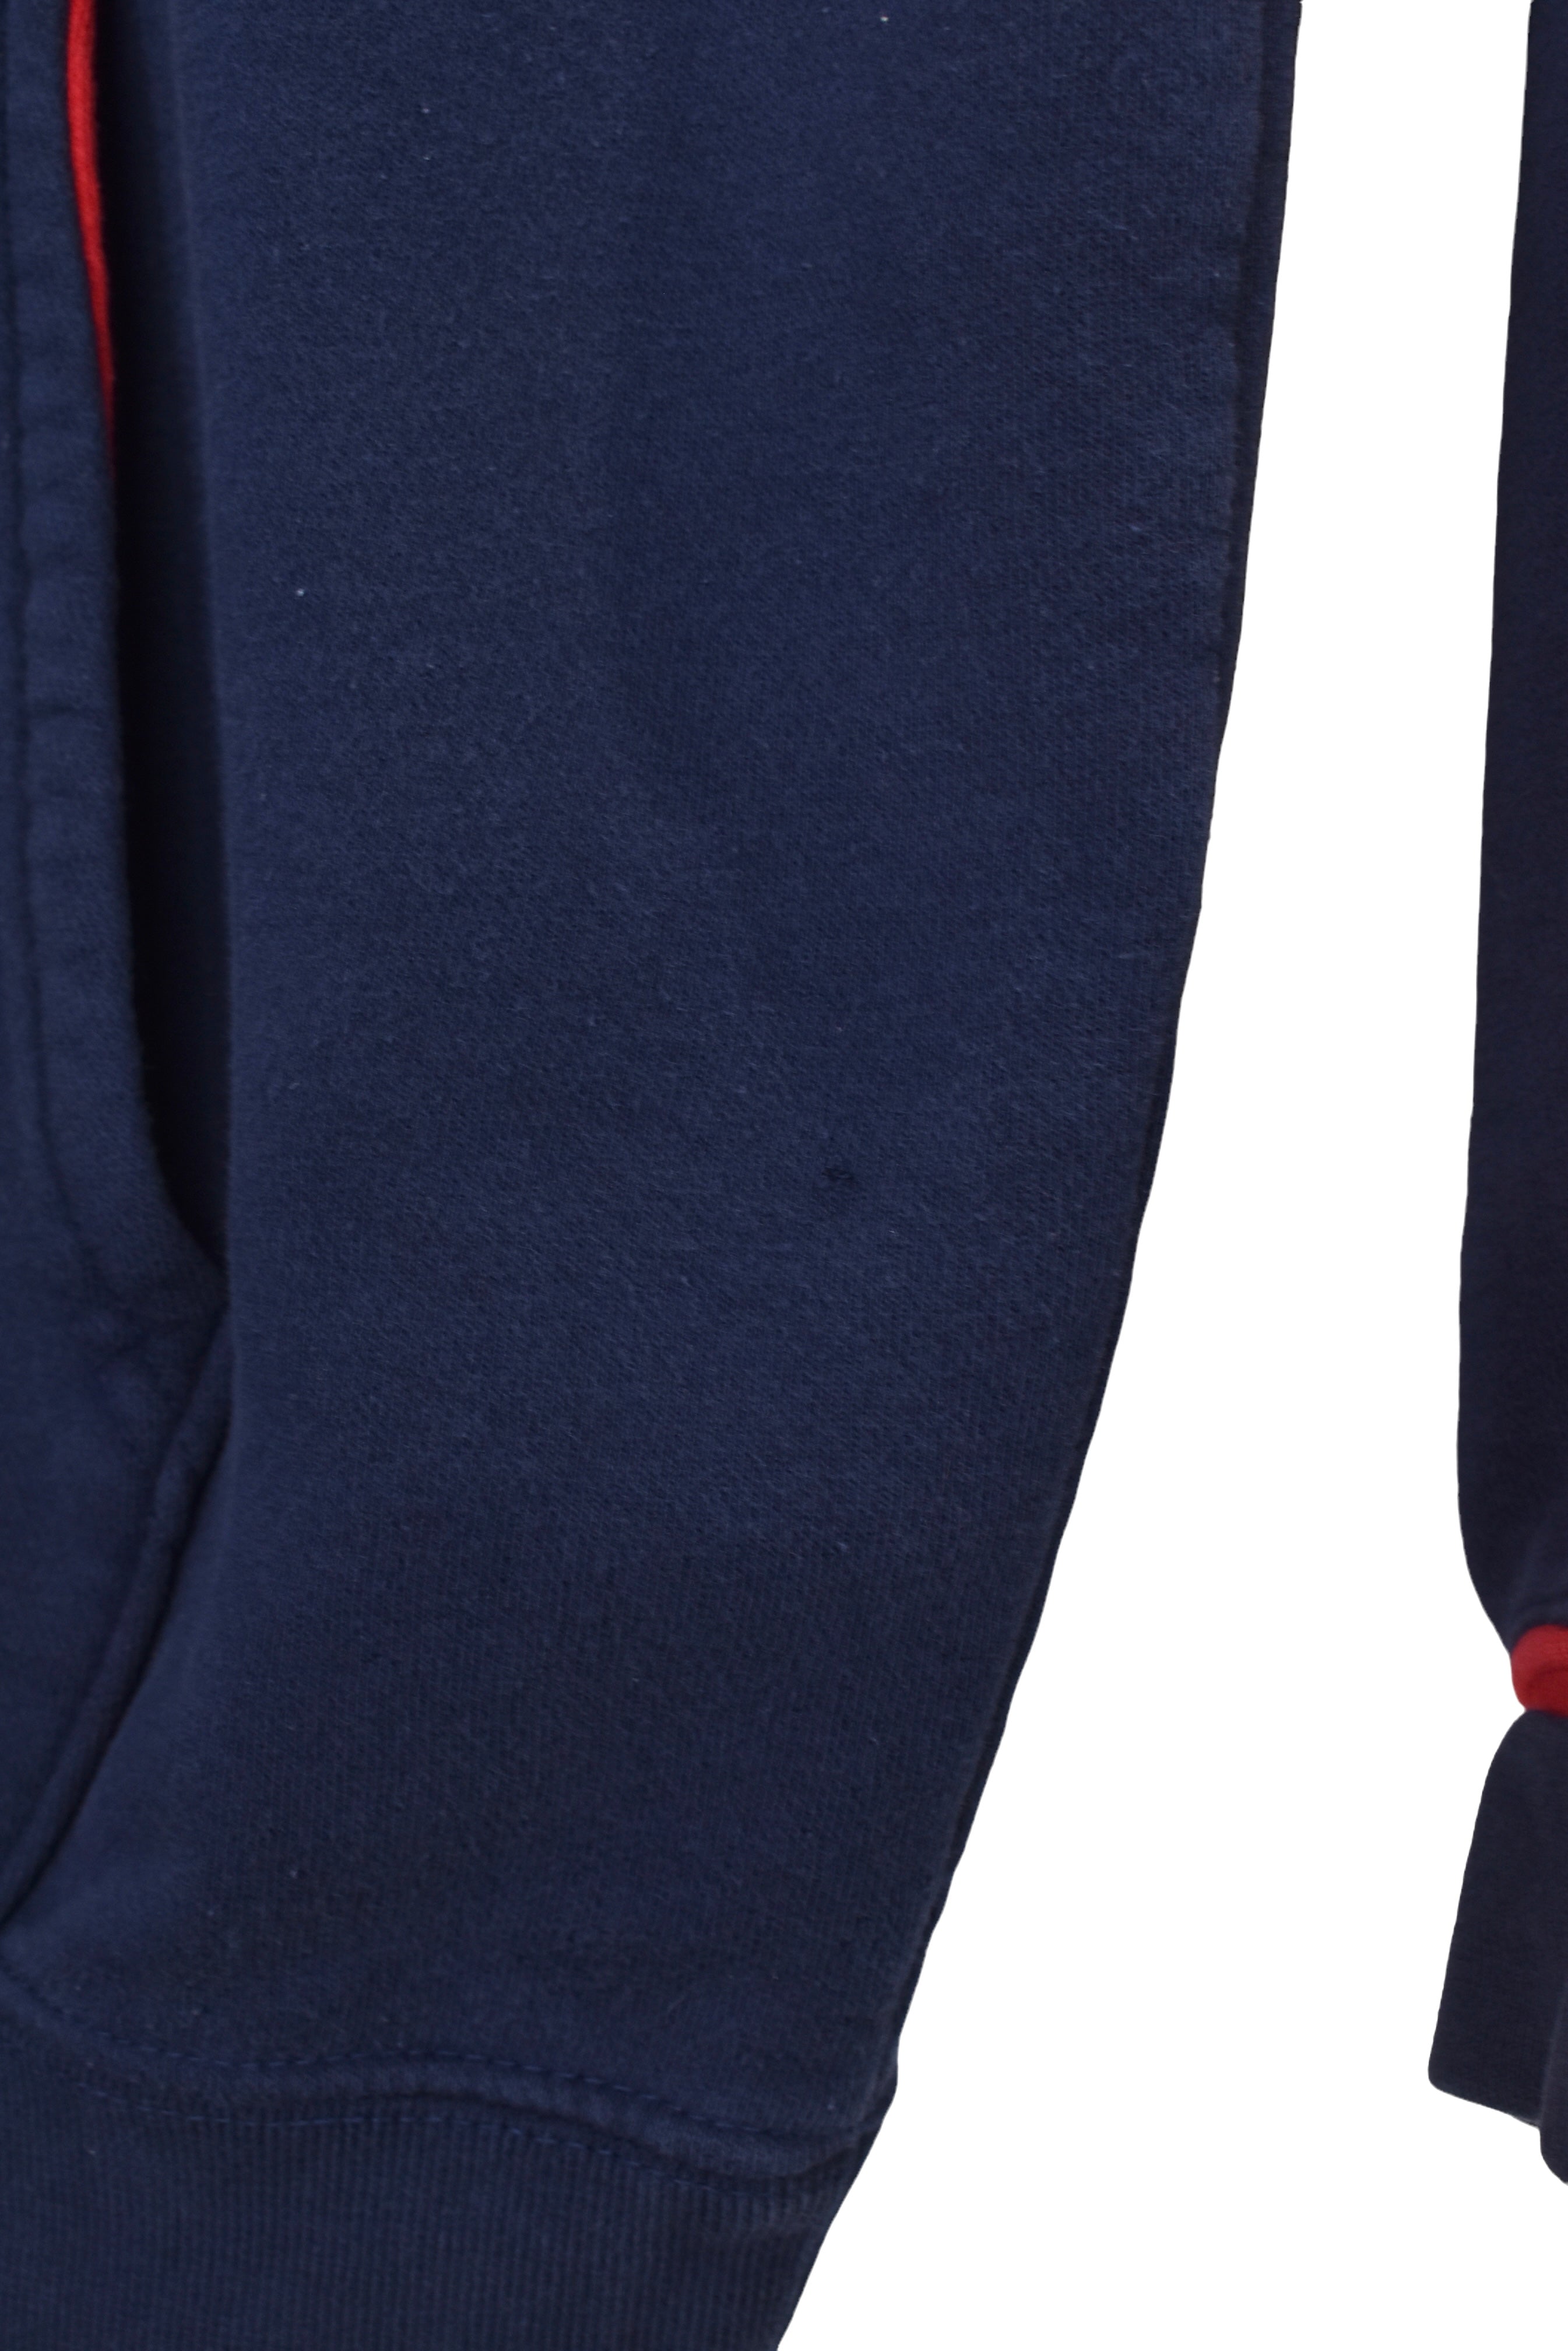 Vintage New England Patriots hoodie (L), navy NFL embroidered sweatshirt